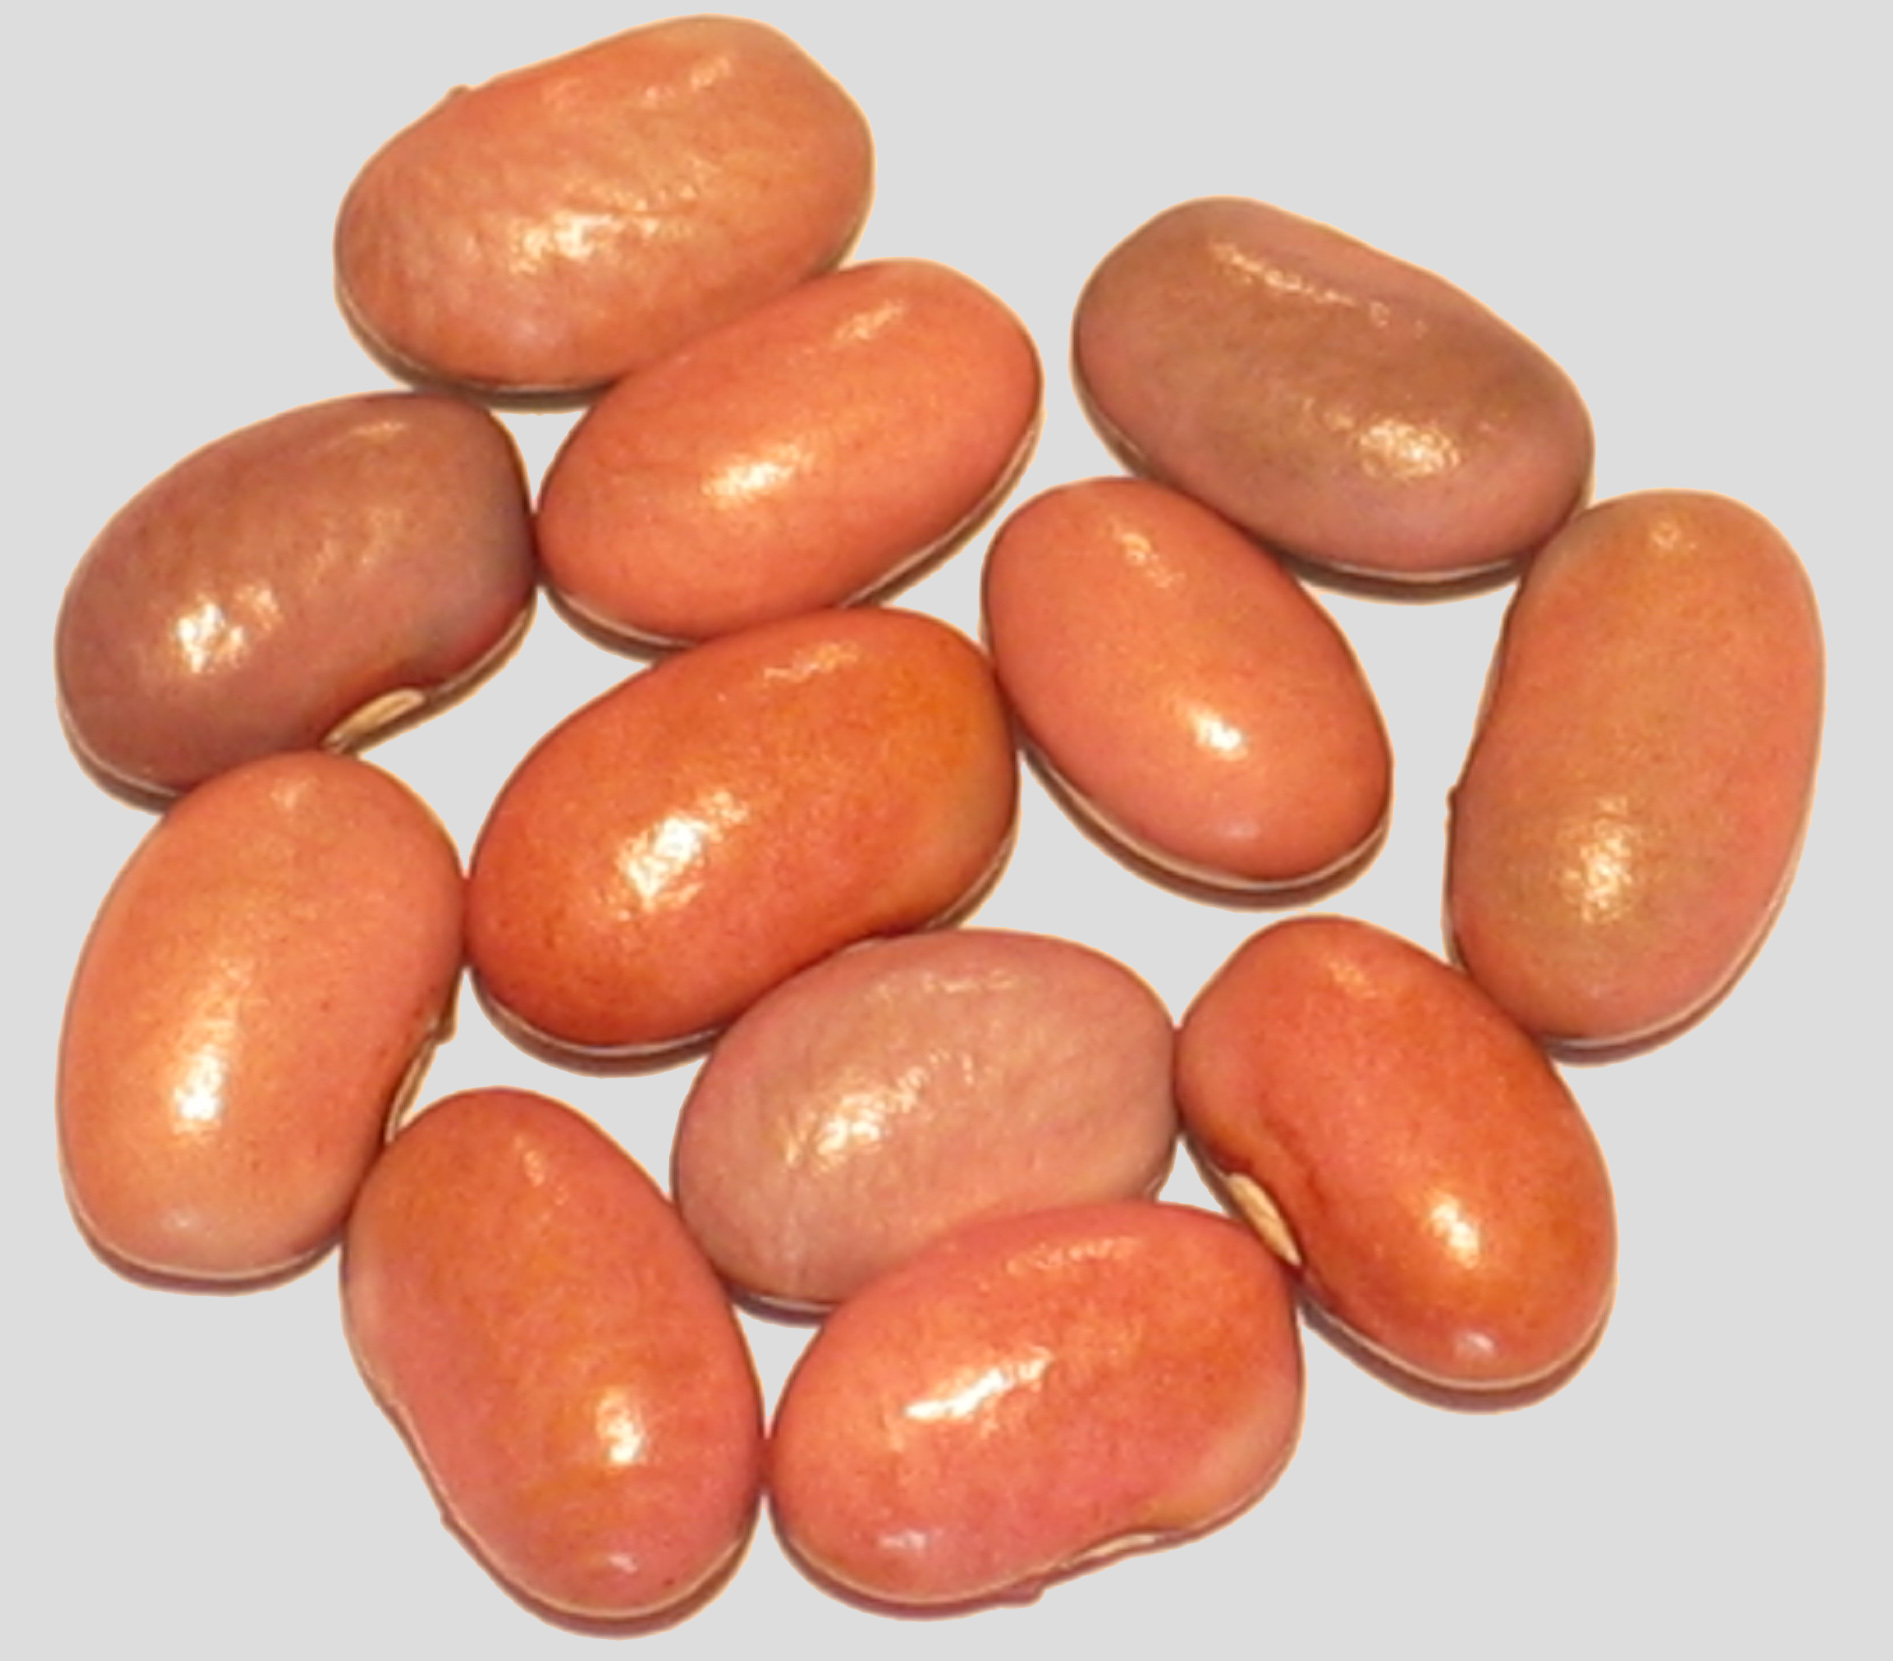 image of Solwezi Variant beans